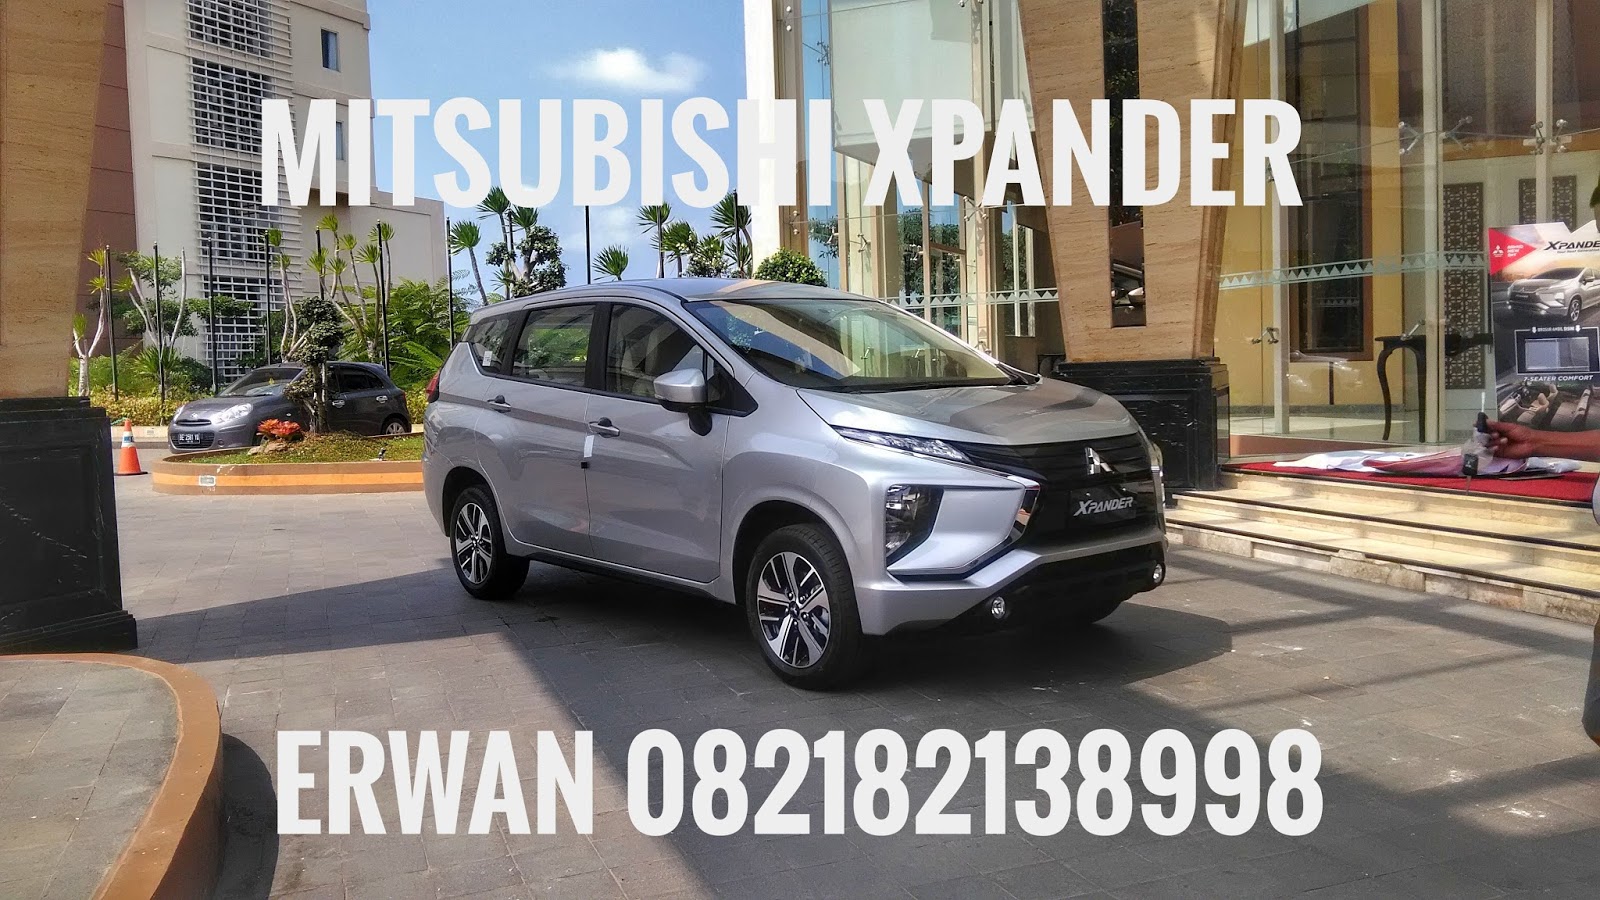 Erwan Mitsubishi Sales Mitsubishi Lampung 082182138998 Erwan